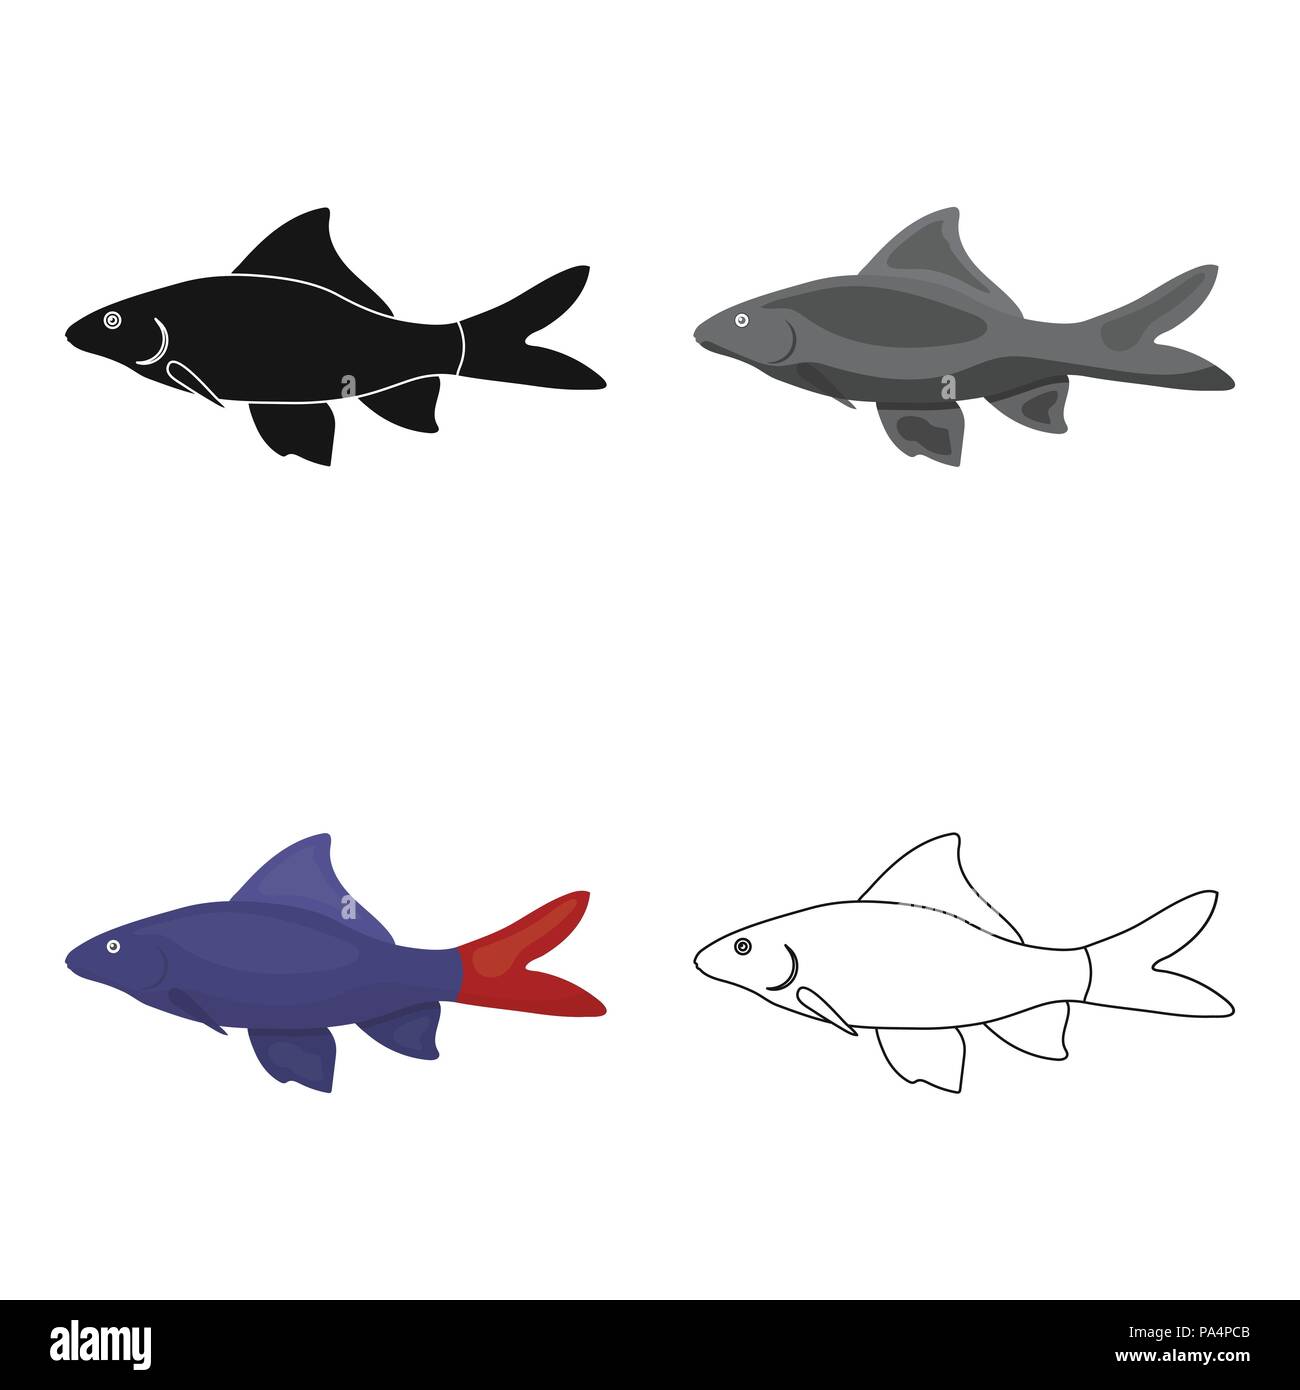 Red Tail Shark fish icon cartoon. Singe aquarium fish icon from the sea,ocean life cartoon. Stock Vector